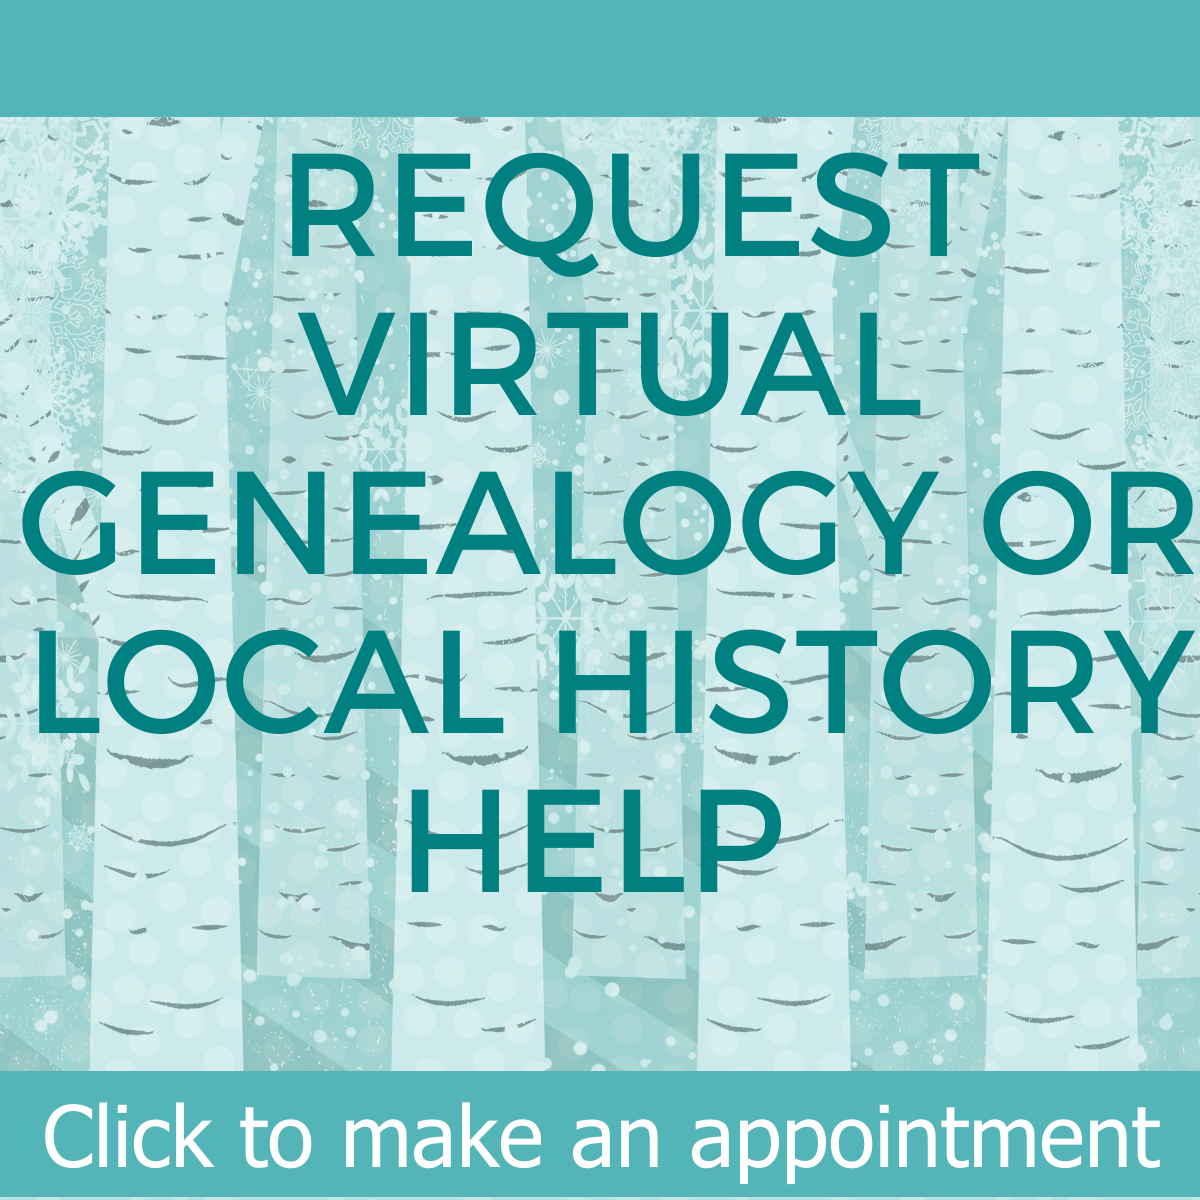 Genealogy Meetup